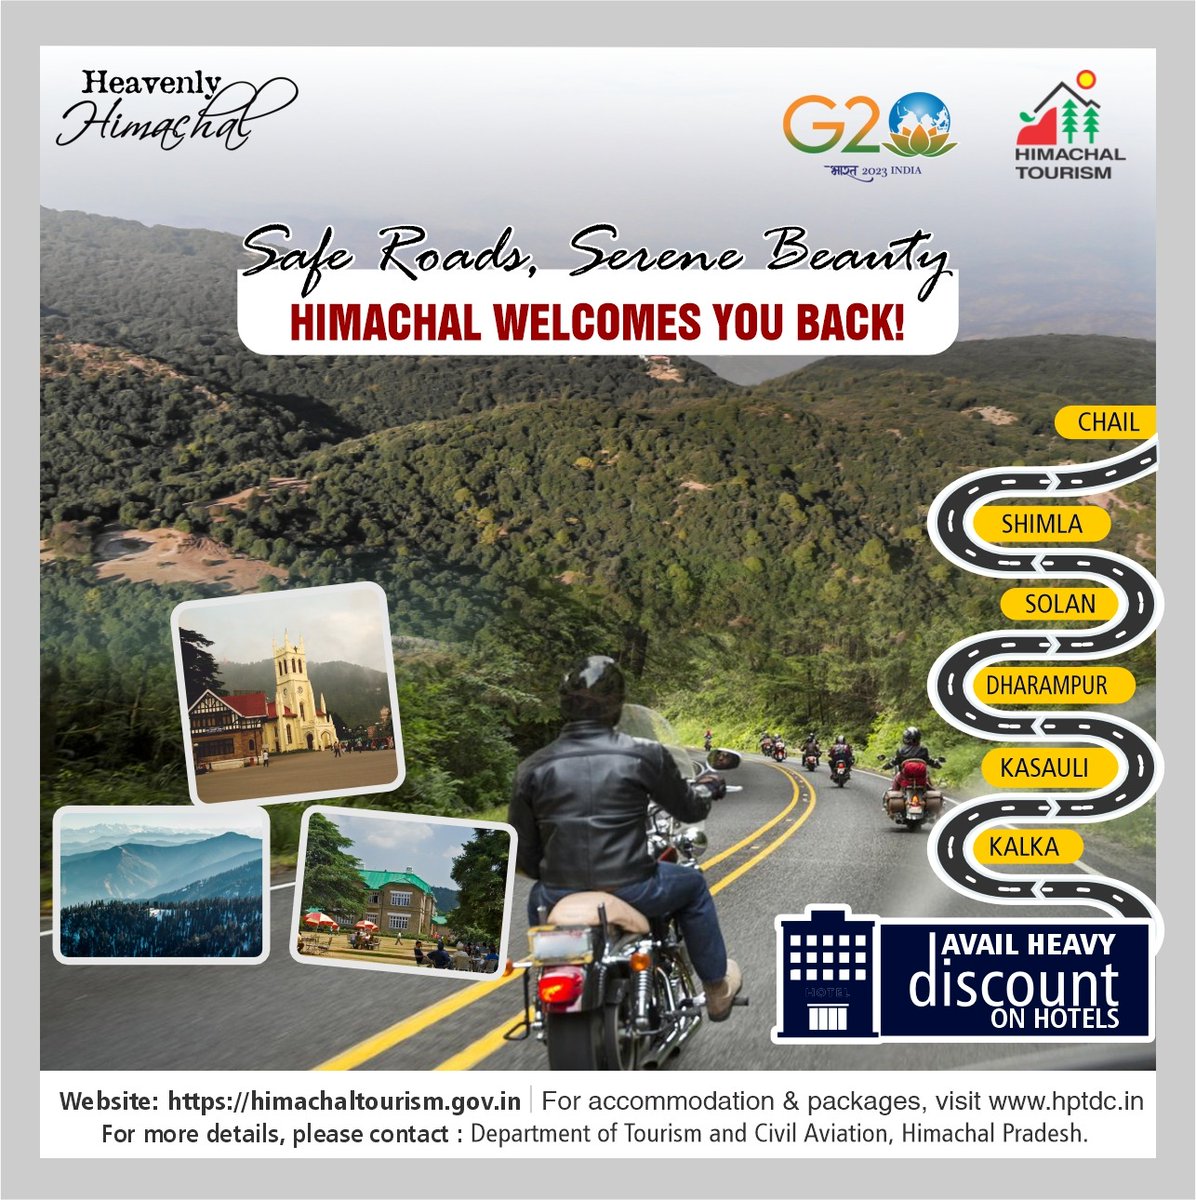 𝑺𝒂𝒇𝒆 𝑹𝒐𝒂𝒅𝒔, 𝑺𝒆𝒓𝒆𝒏𝒆 𝑩𝒆𝒂𝒖𝒕𝒚
Himachal Tourism welcomes you back!

#himachaltourismofficial #saferoads #welcometourists #HeavenlyHimachal #HimachalPradesh